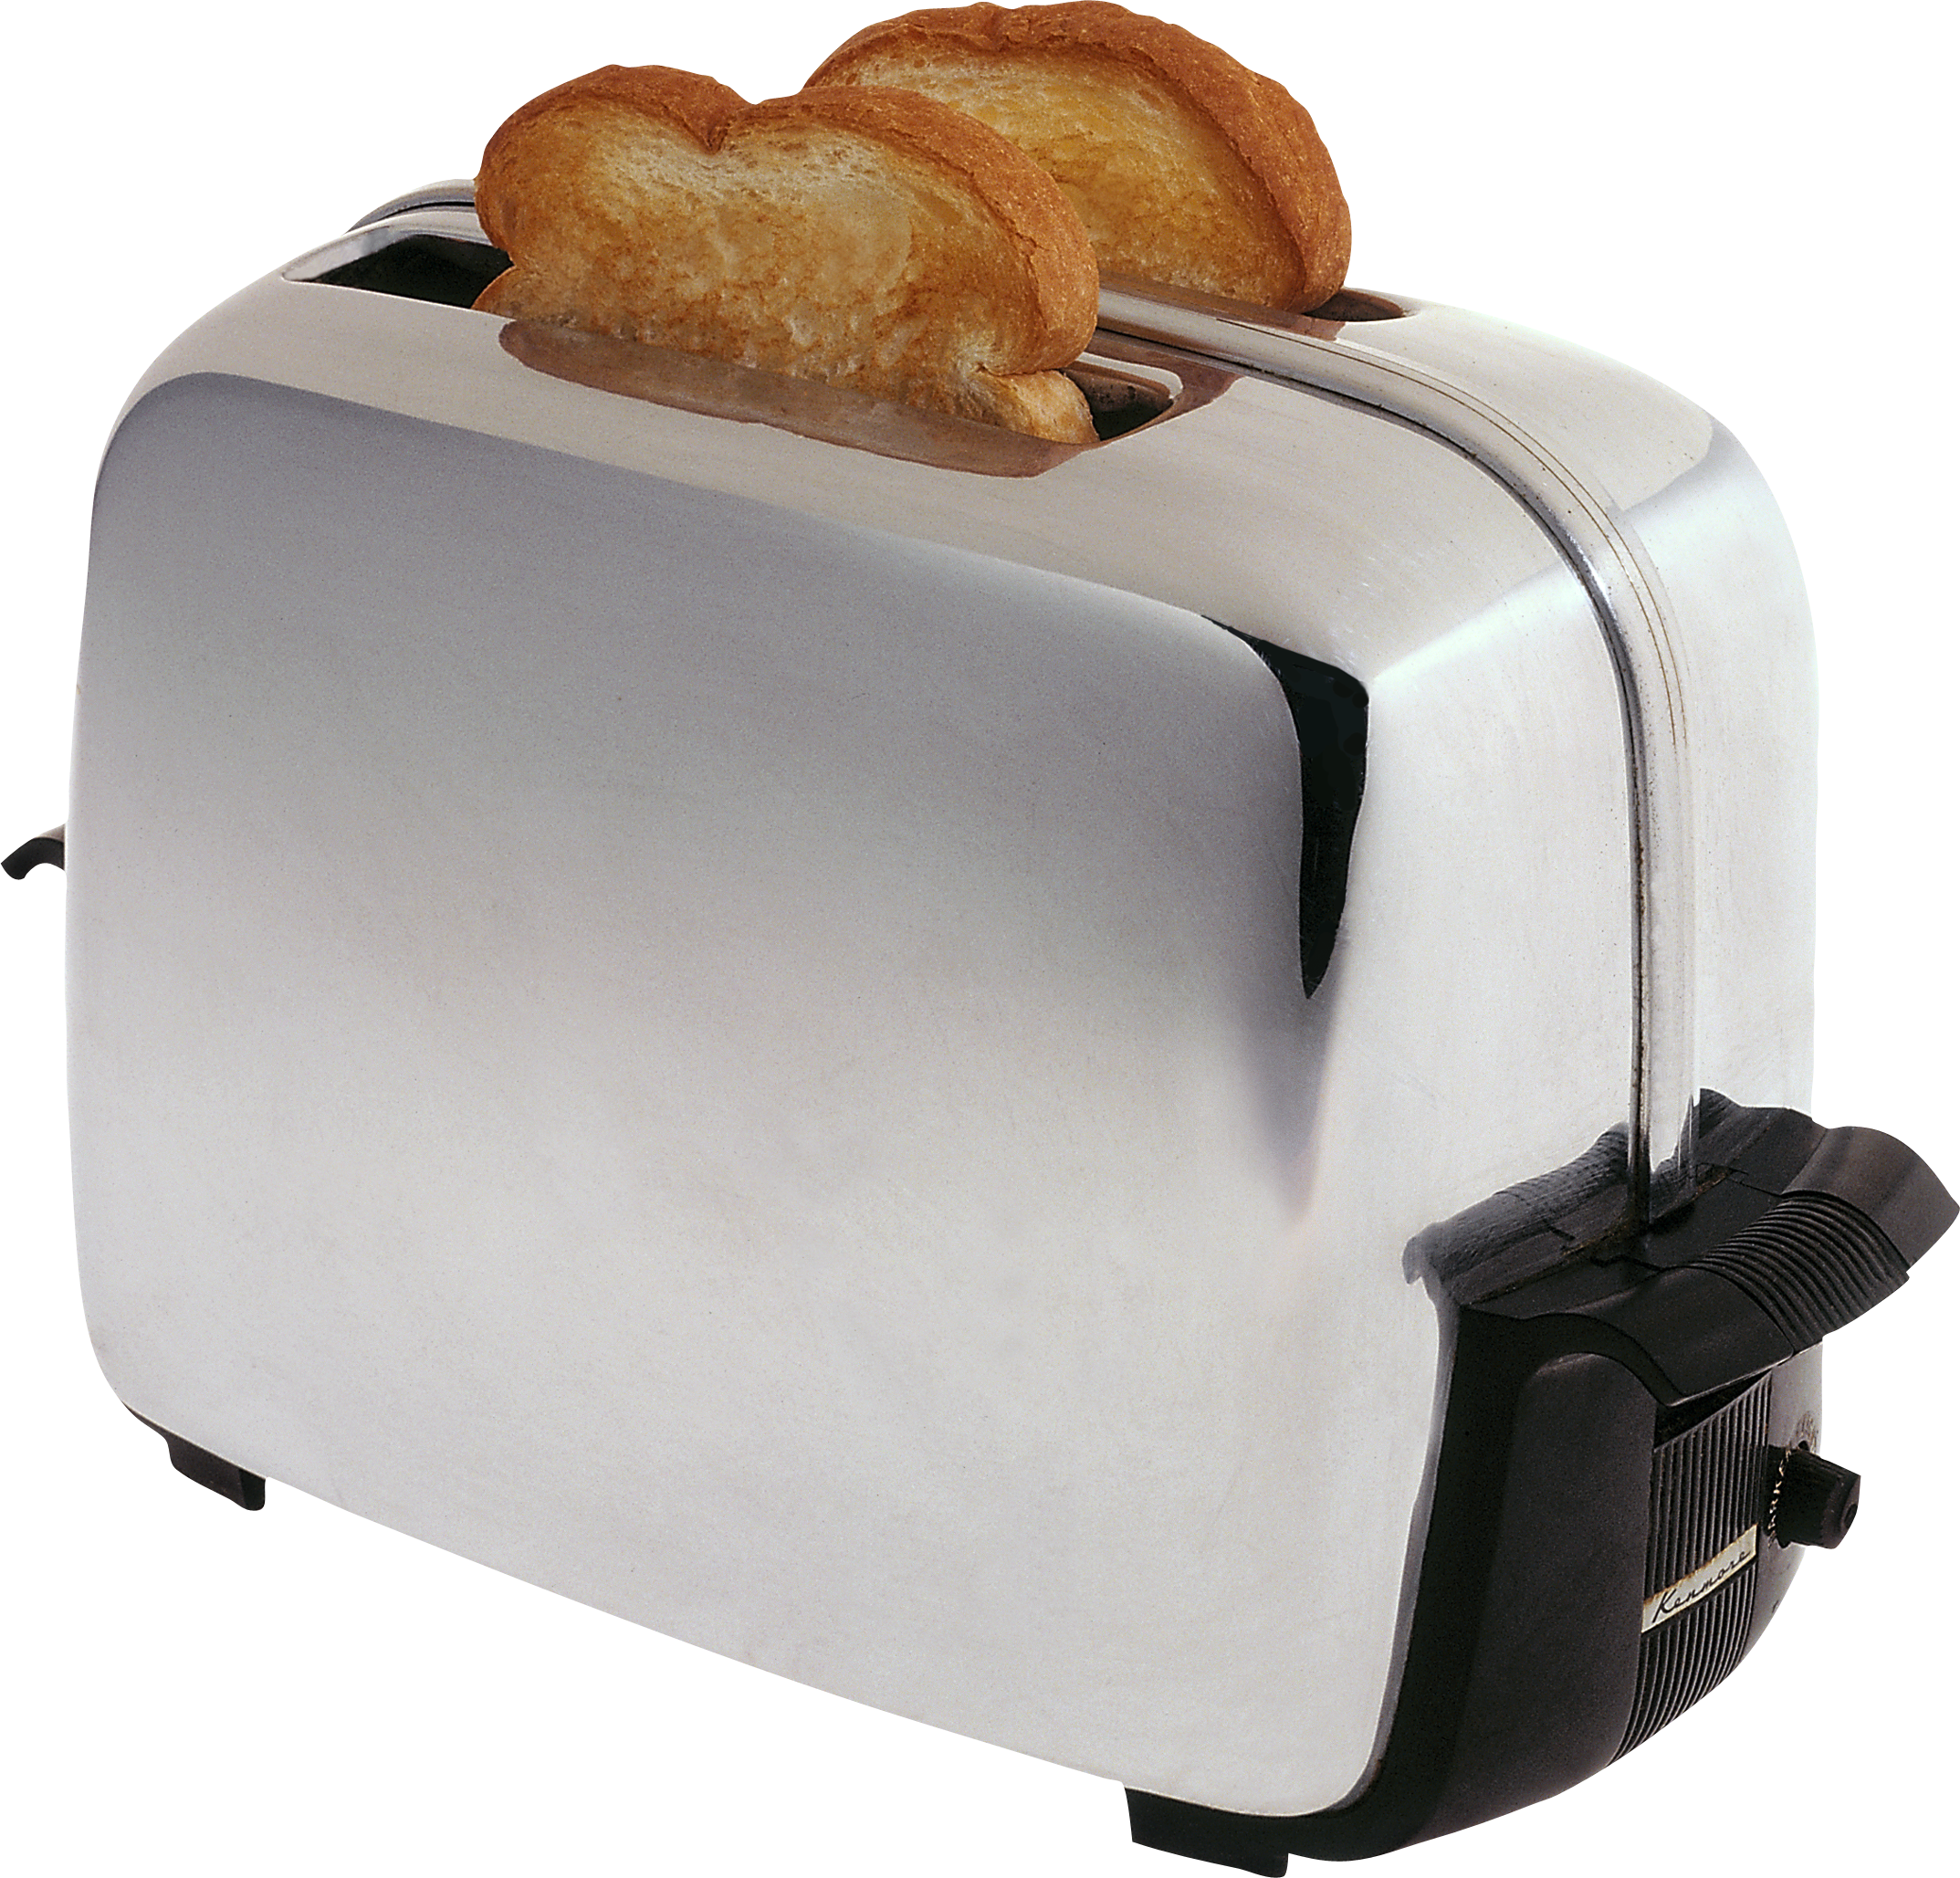 Toaster PNG image free Download 